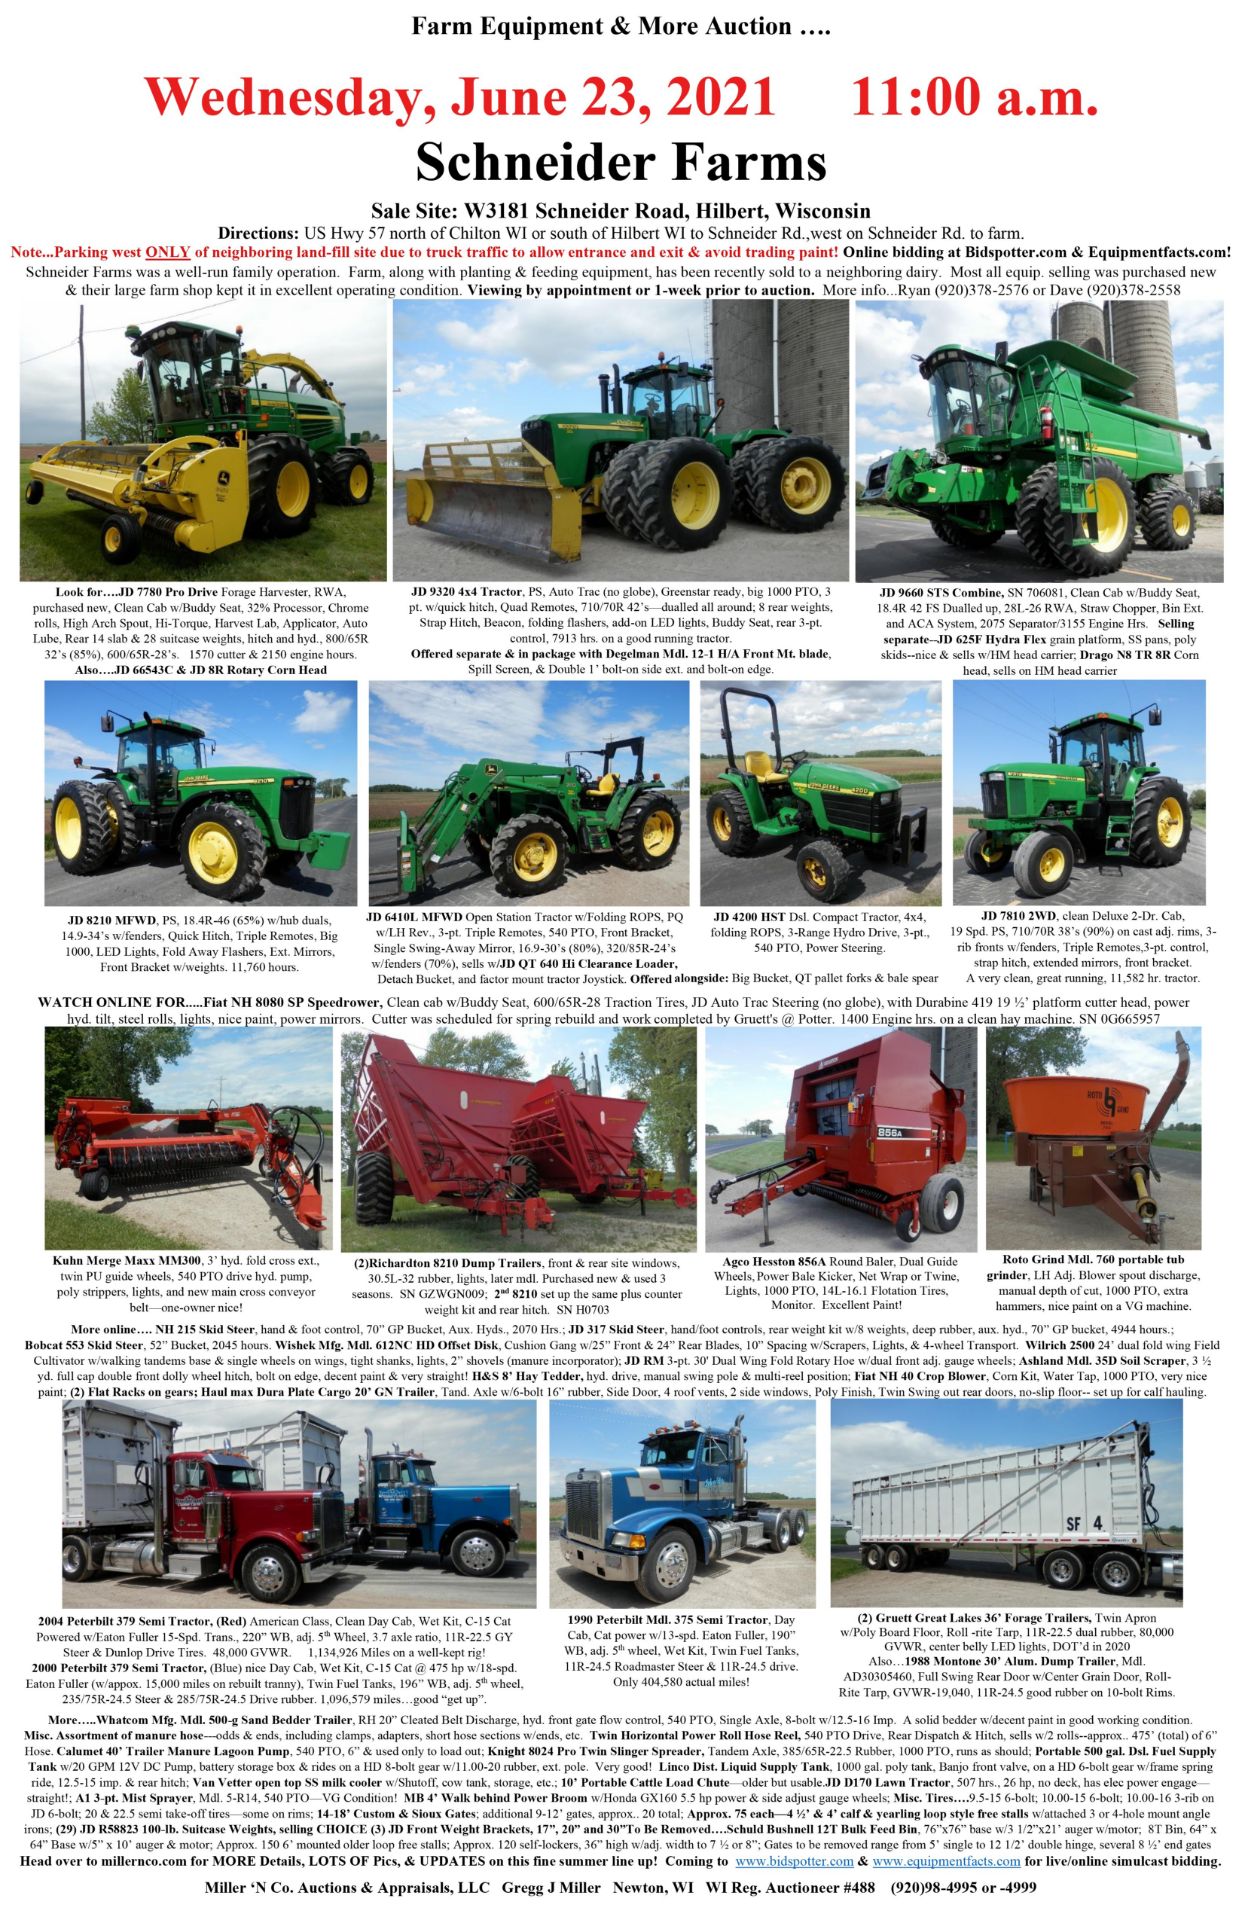 JD Pro Drive 7780 SP Harvestor, JD 9660 Combine, JD Tractors, & More!